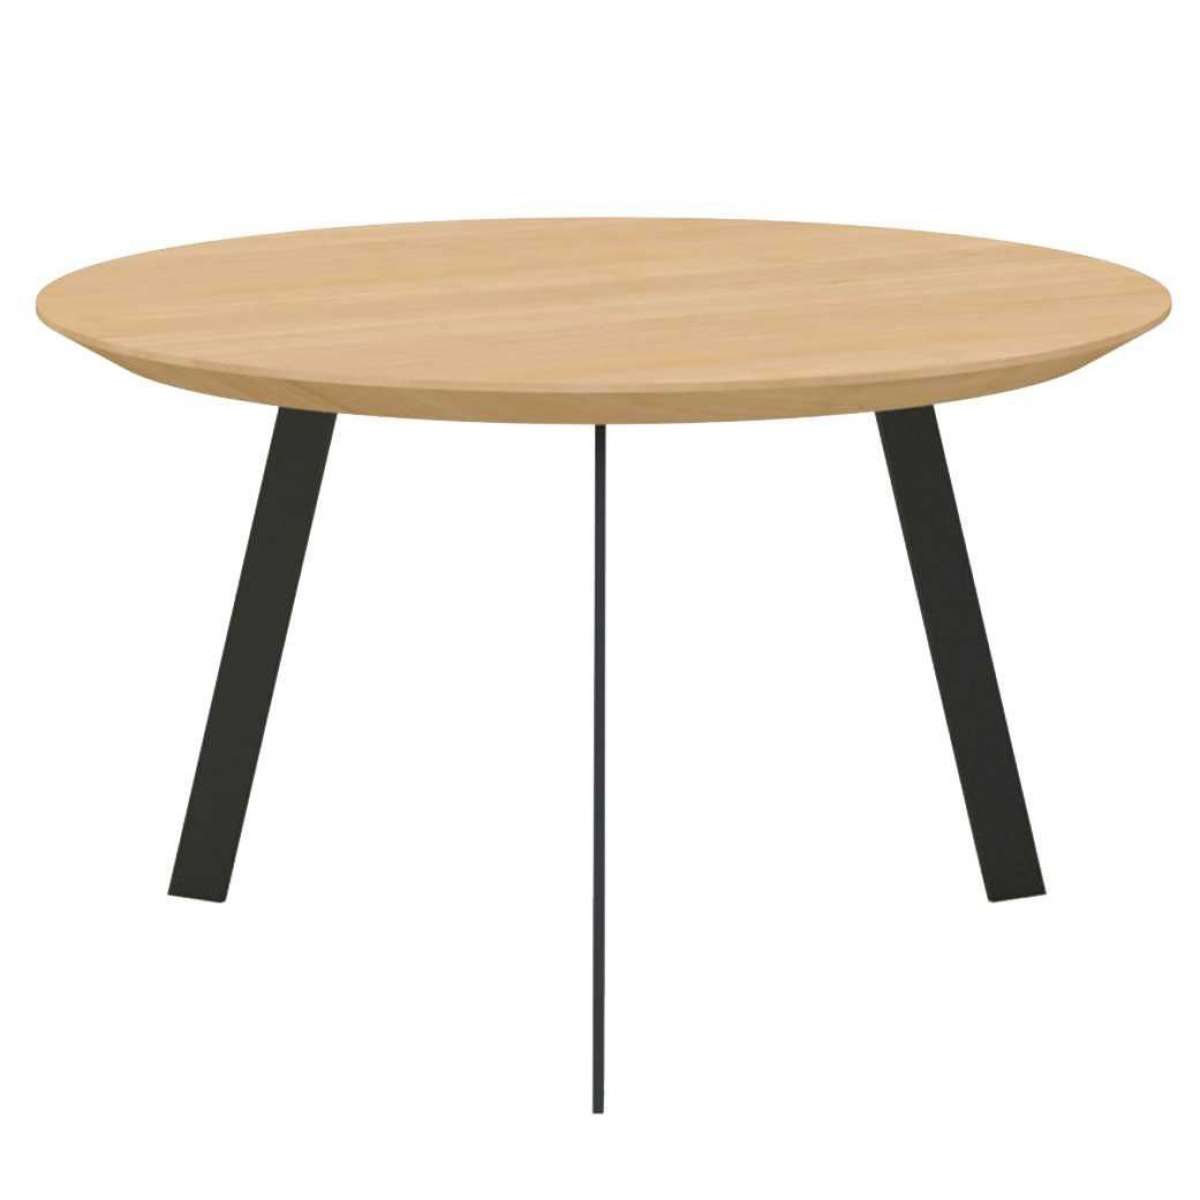 https://www.fundesign.nl/media/catalog/product/n/e/new-co-coffee-table-700-zwart-onderstel-naturel-3062-studio-henk-6fea72060cd510fbd366f5cb1a96625e.jpg